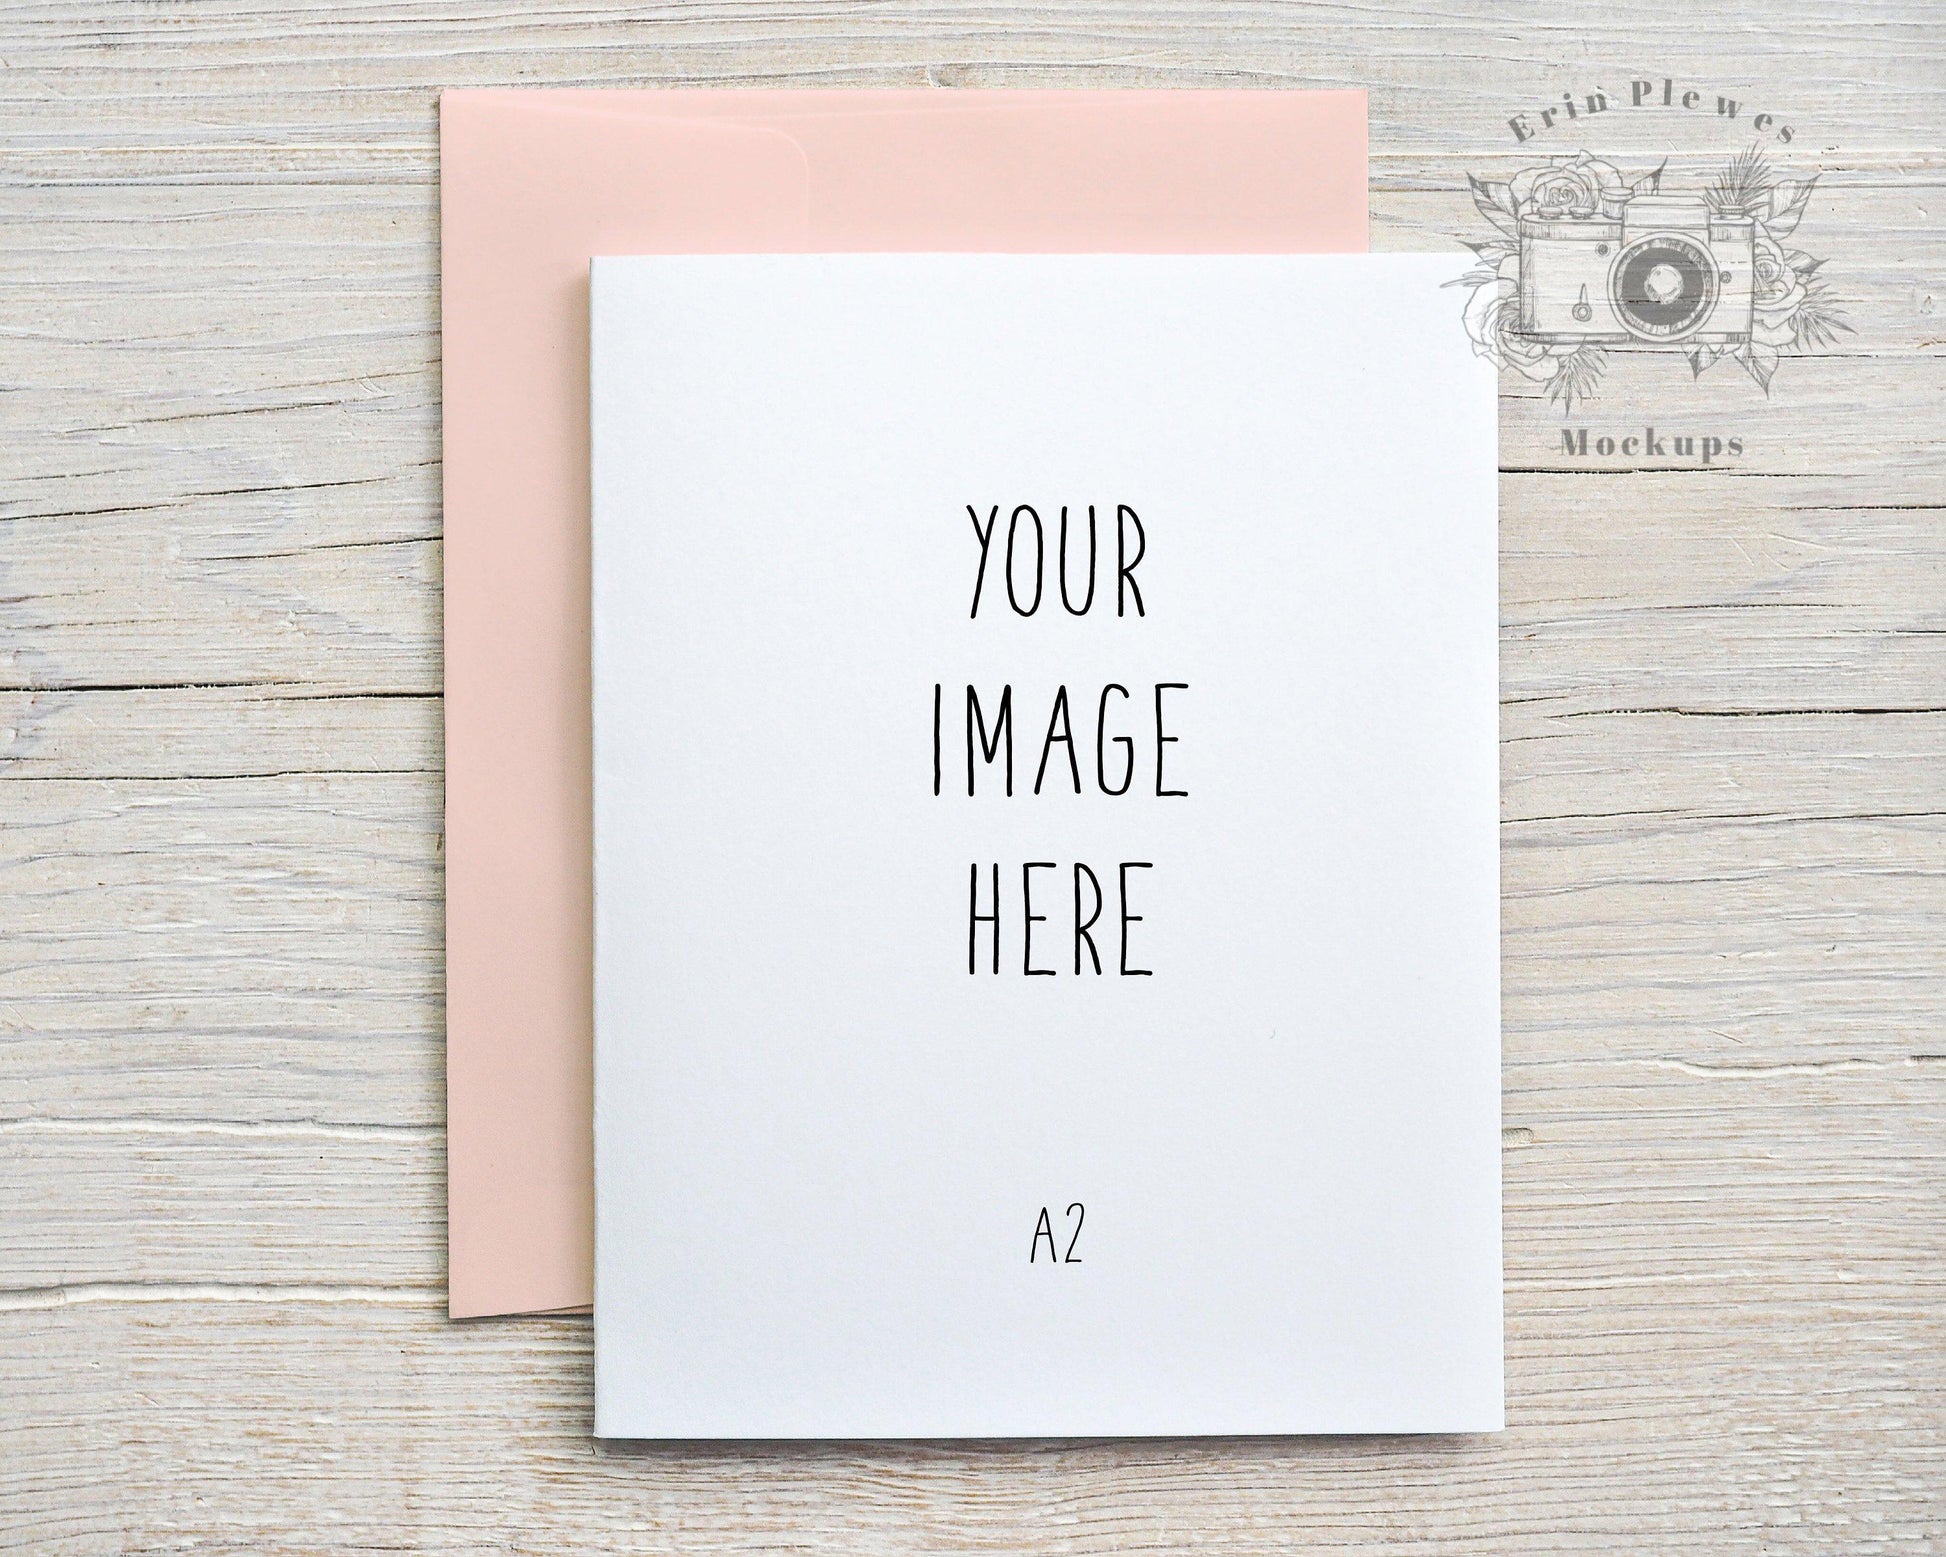 Erin Plewes Mockups A2 Greeting Card Mockup with Pink Envelope, Digital Download